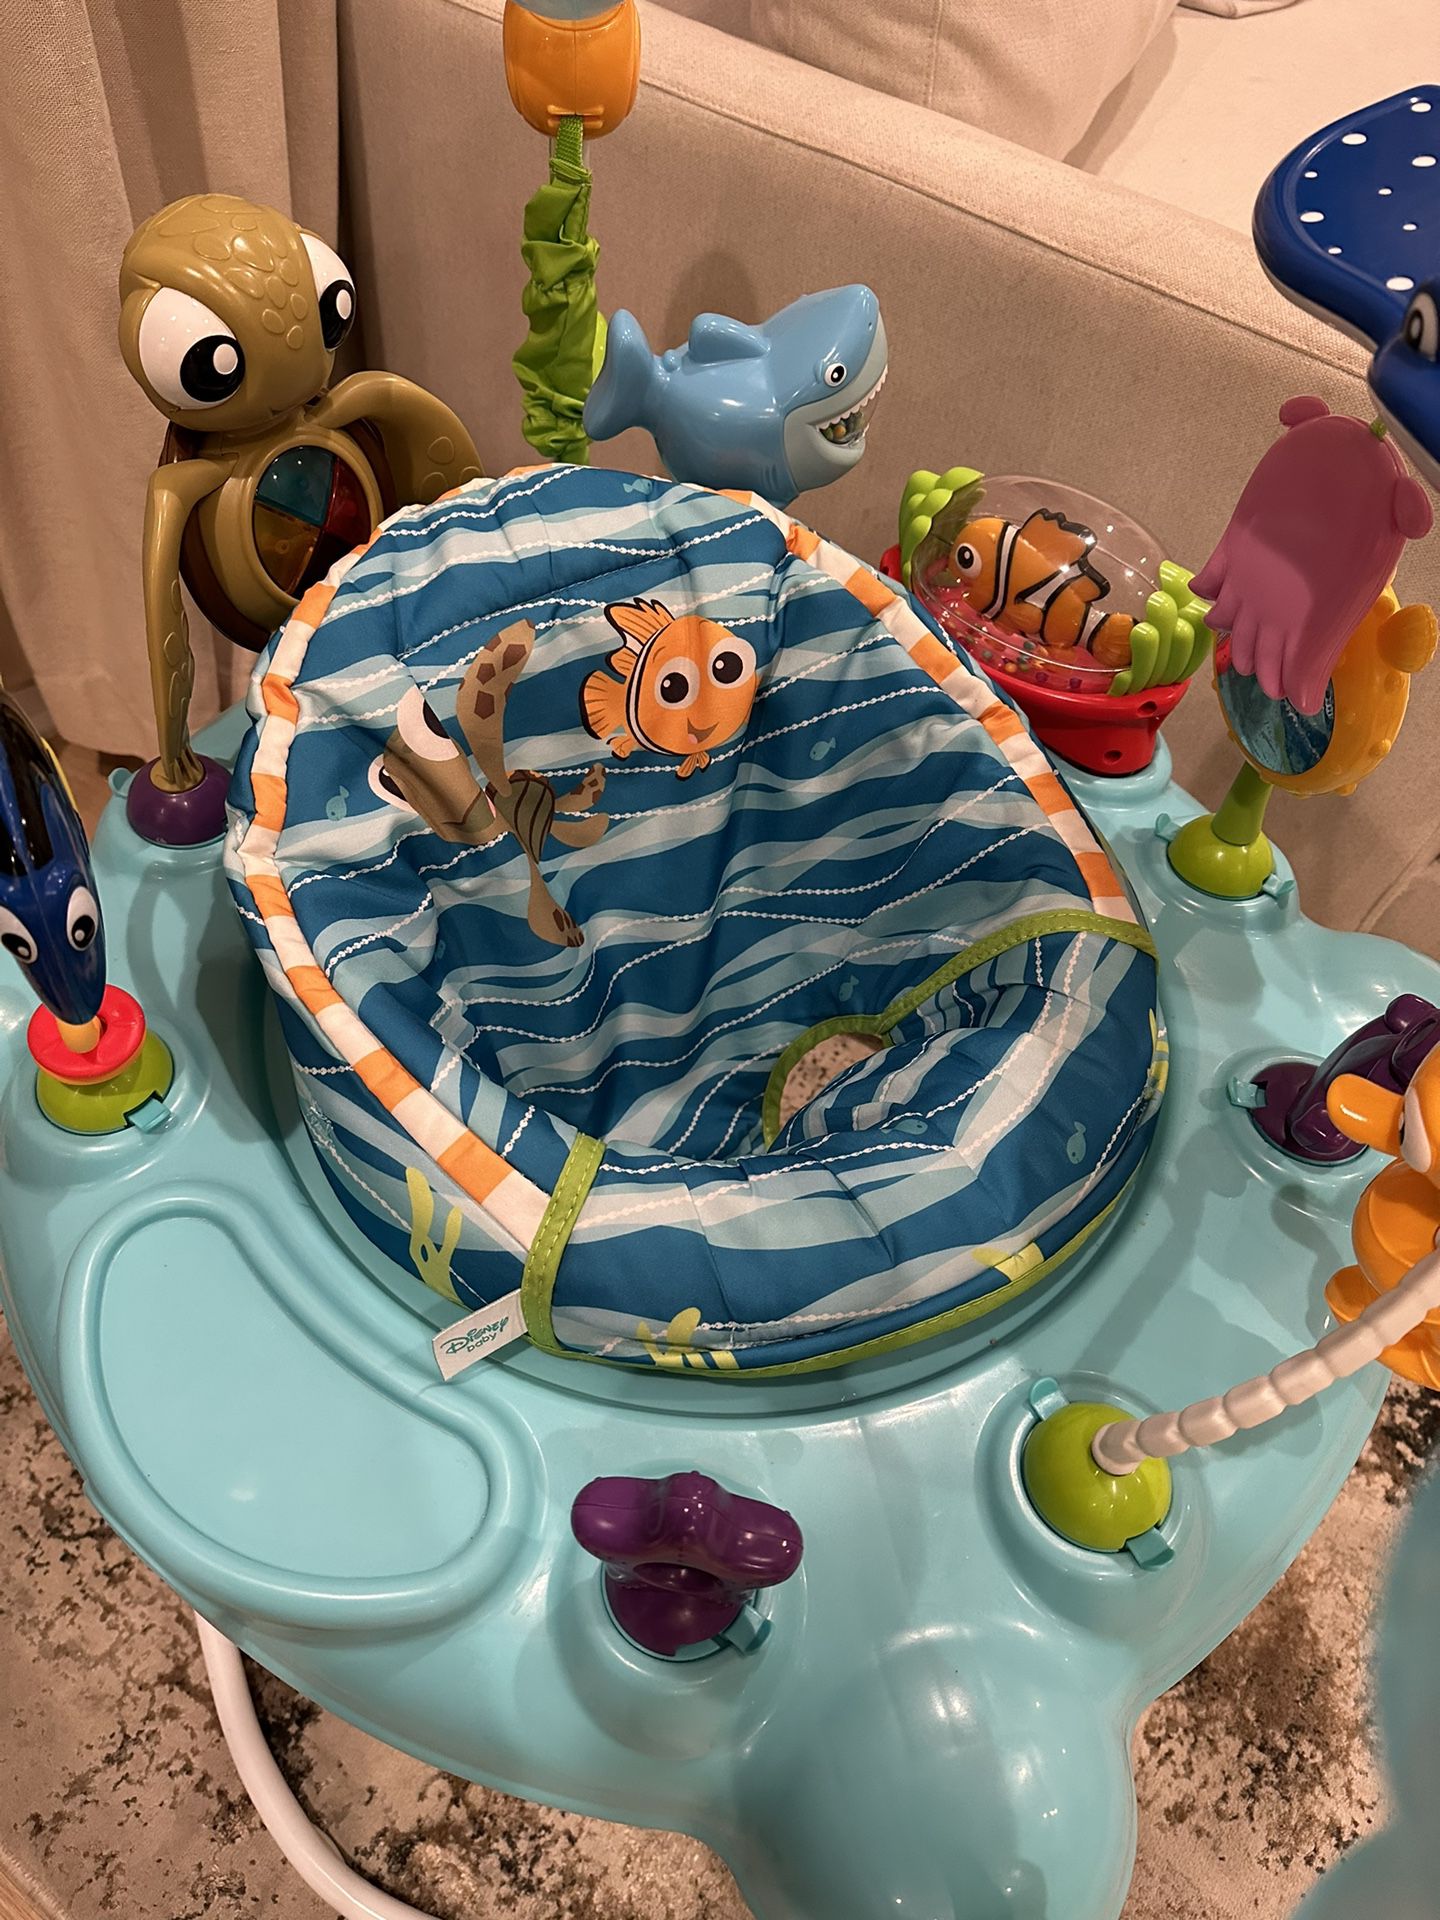 Finding Nemo Baby Bouncer